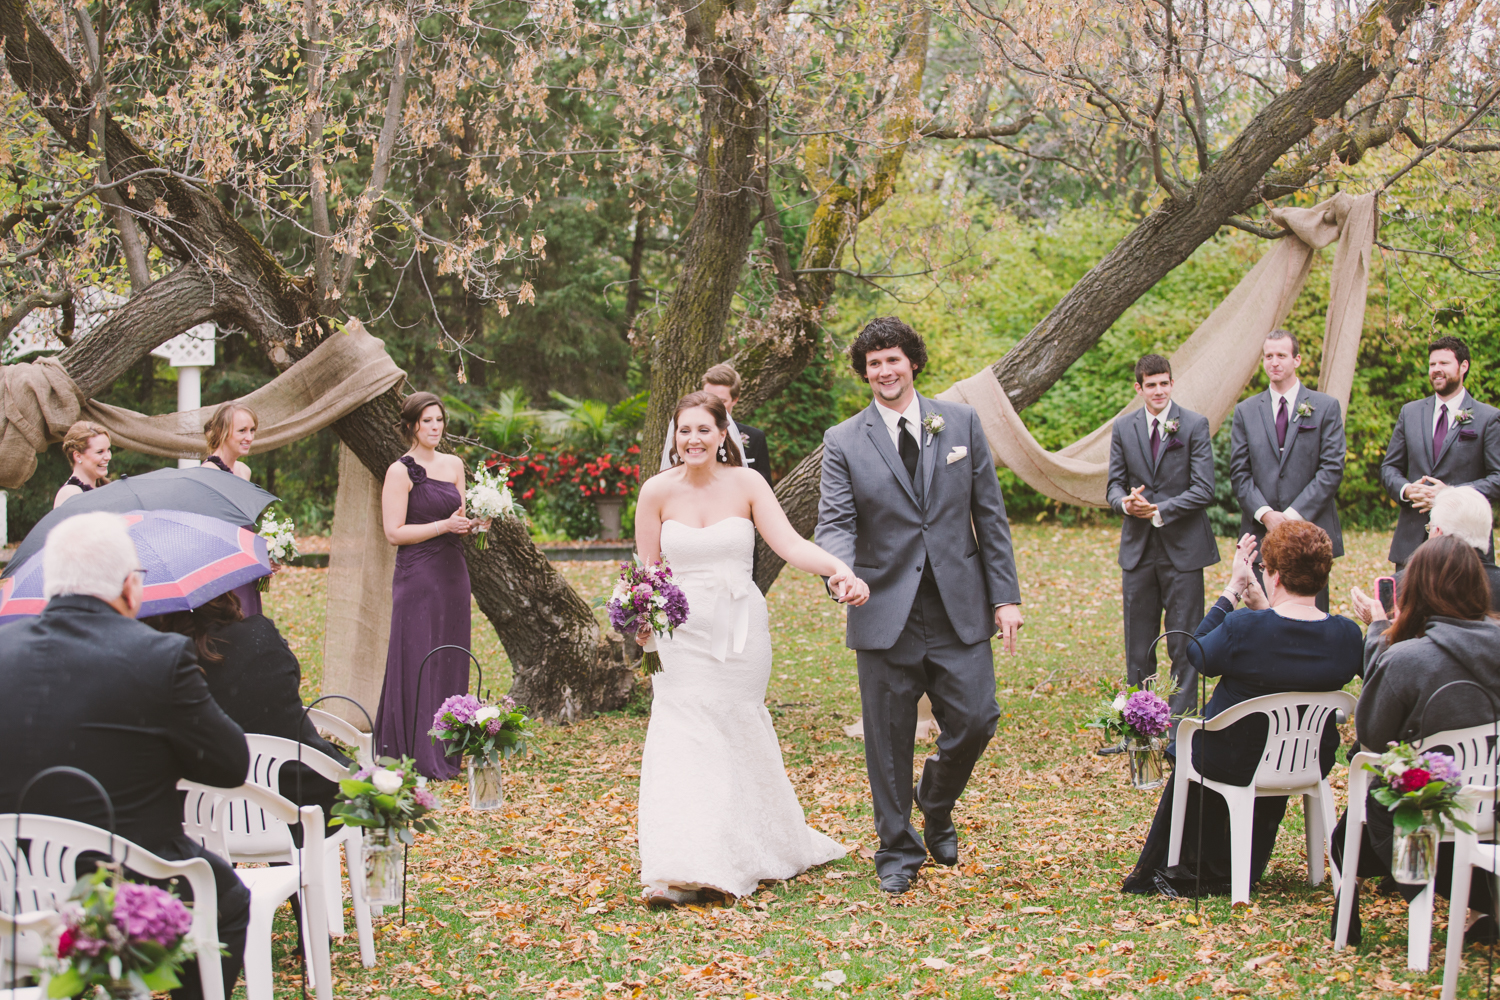 Stephanie & Grant's Fall Country Wedding - Amanda Douglas Events - Evergreen Village